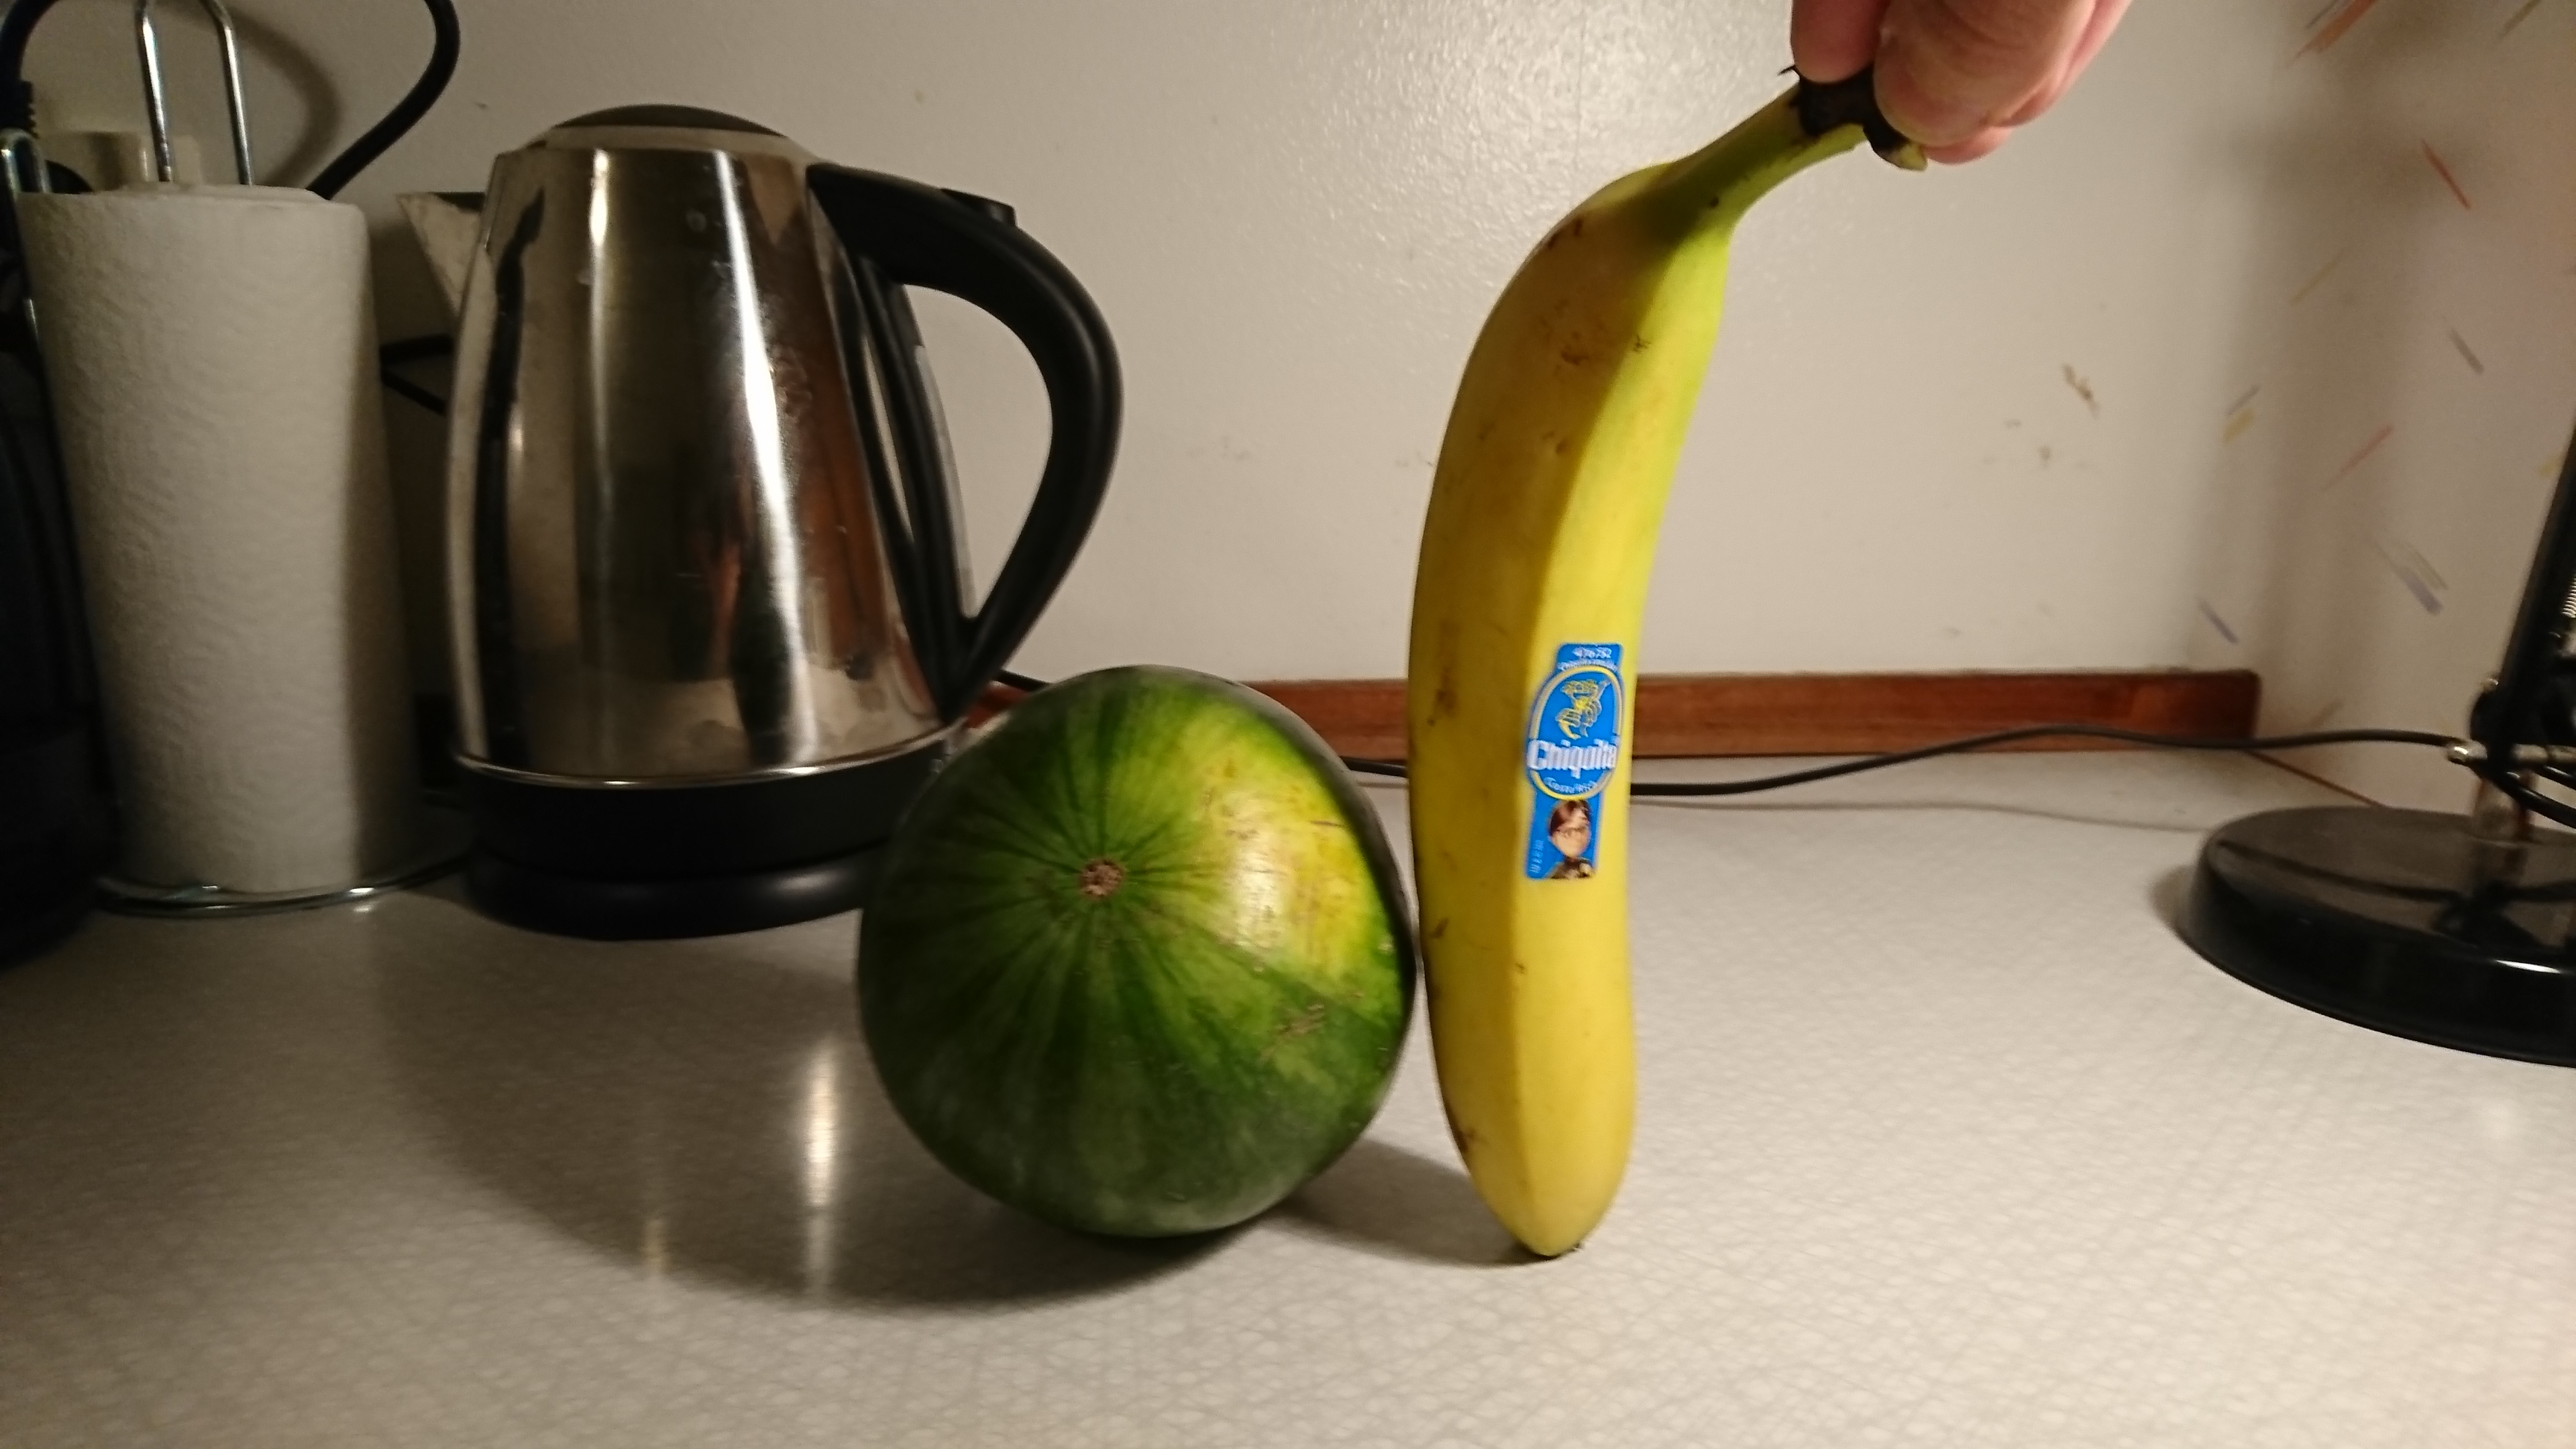 "Banana for scale again."